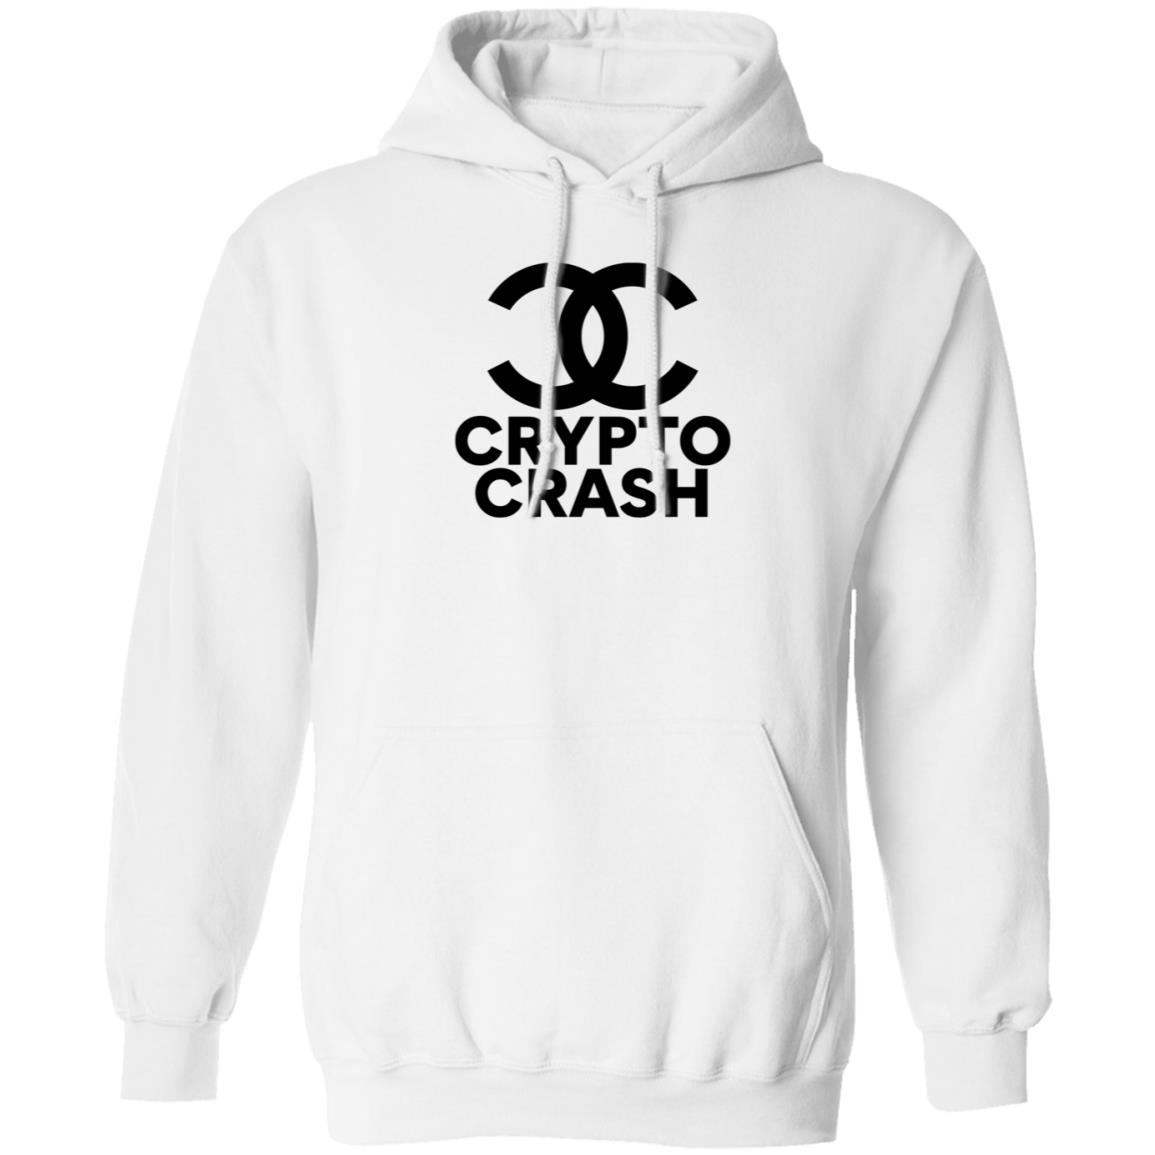 Crypto Crash Shirt 1